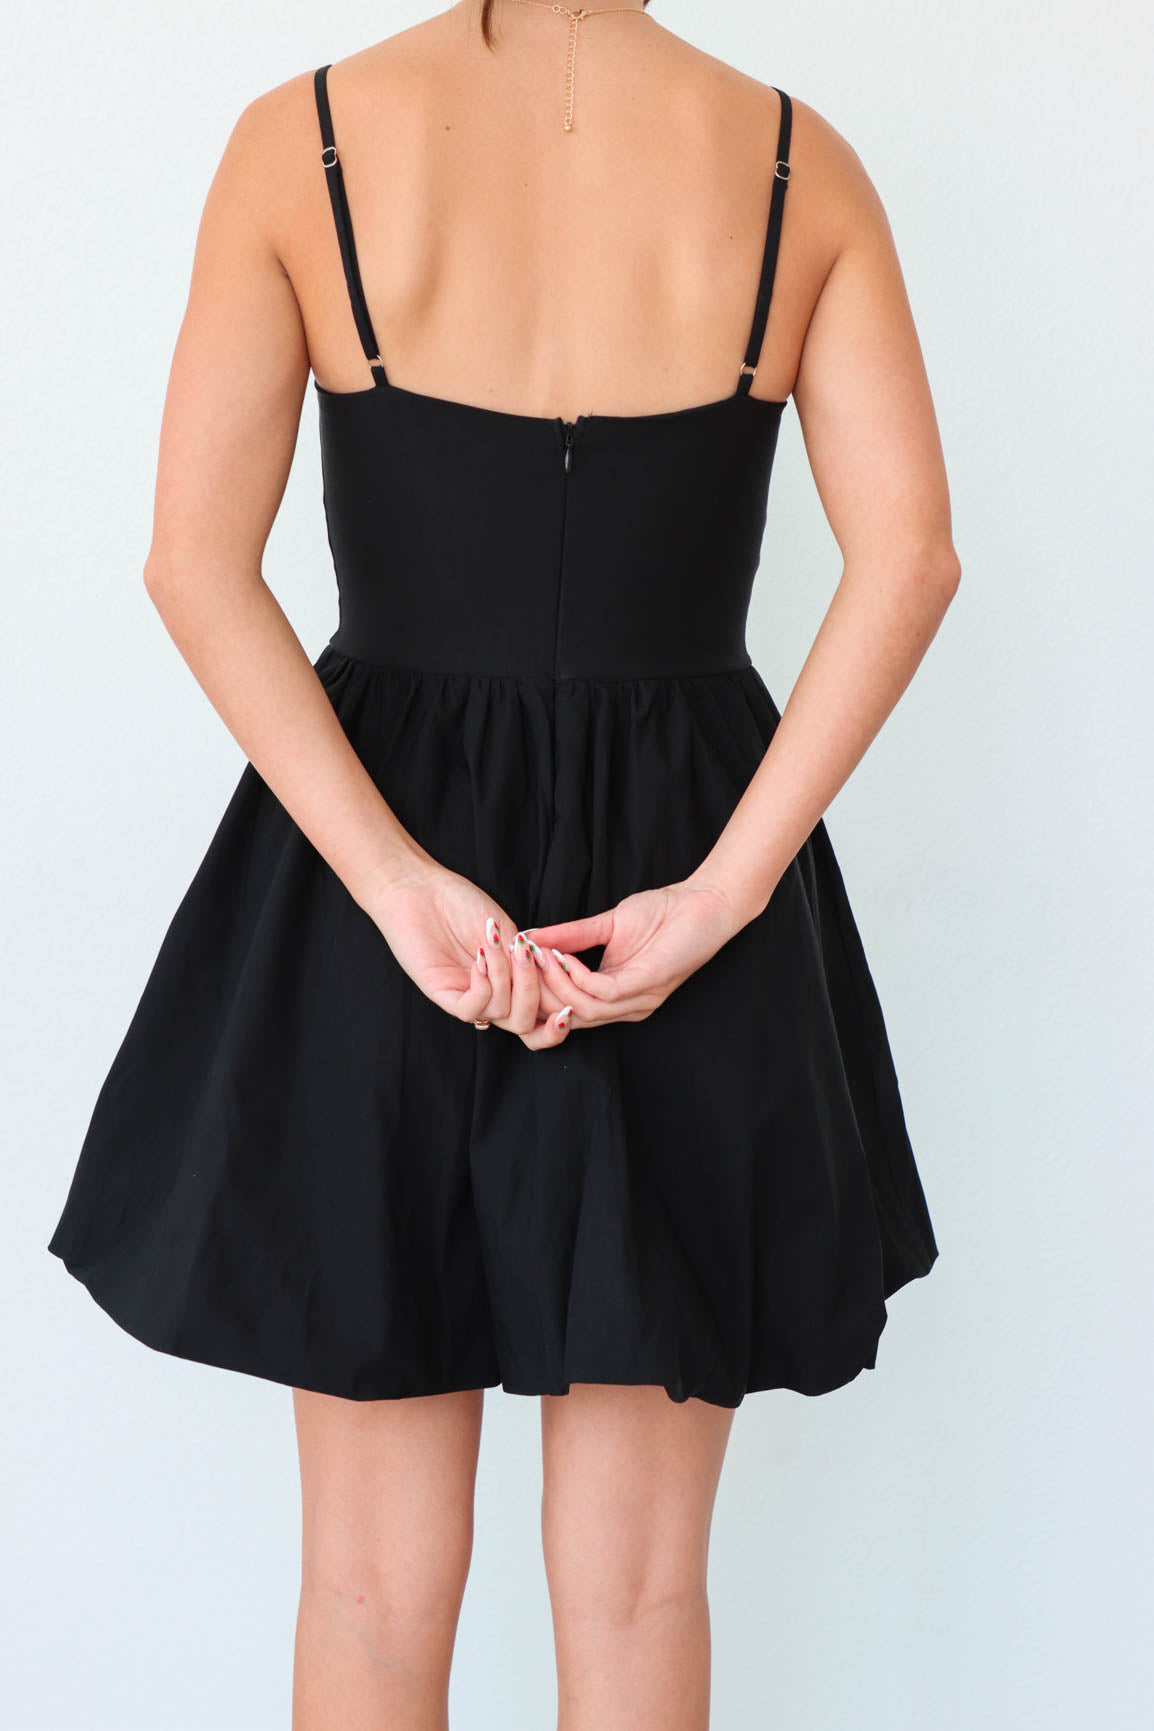 back zipper detailing on short black dress